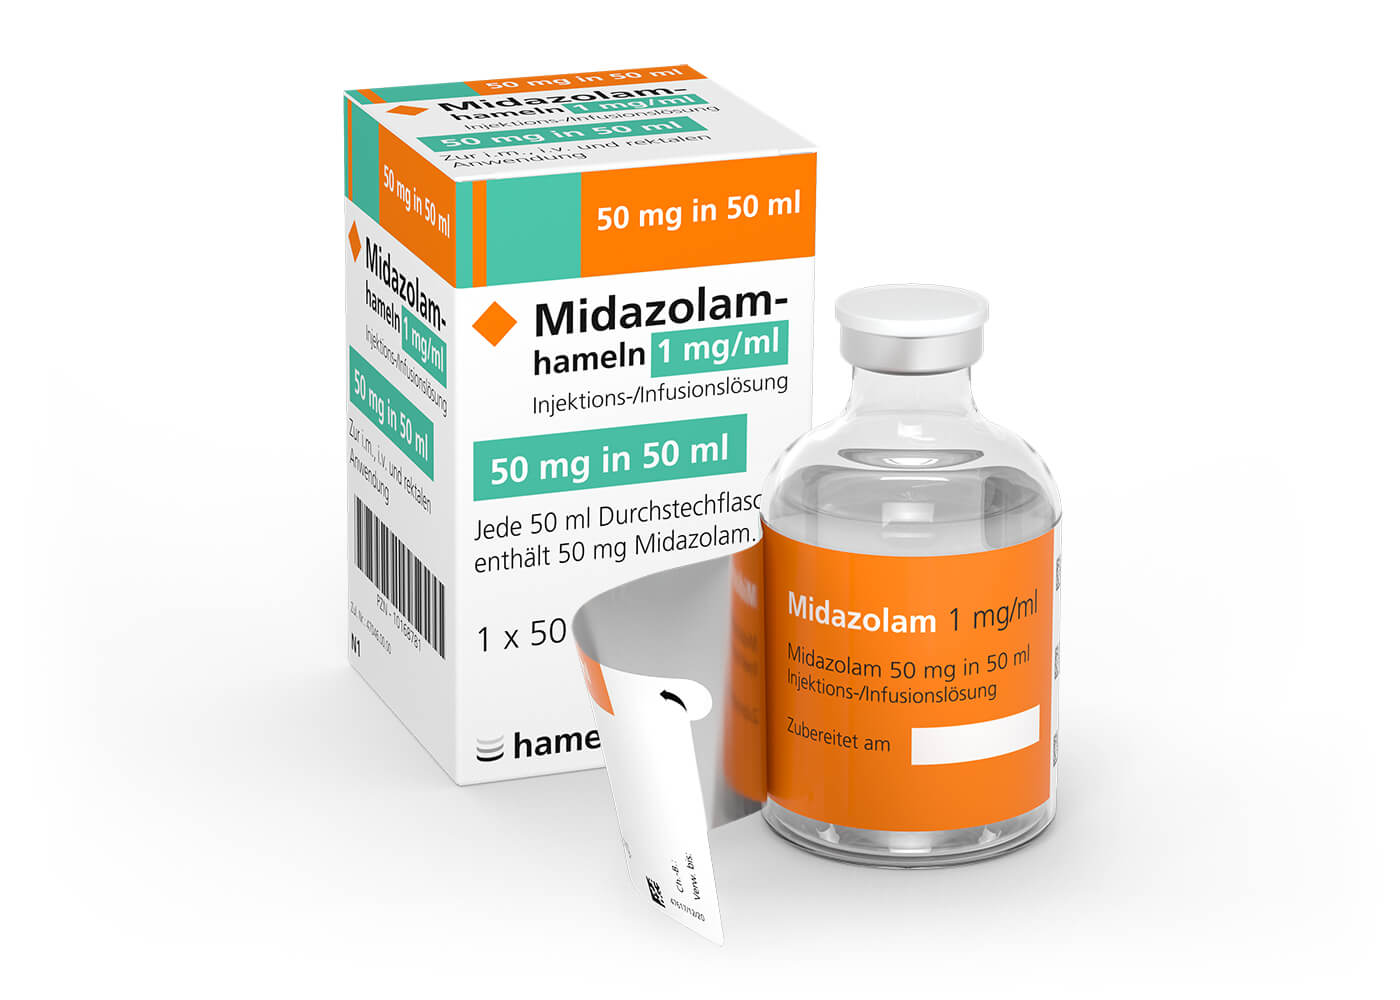 midazolam antidote